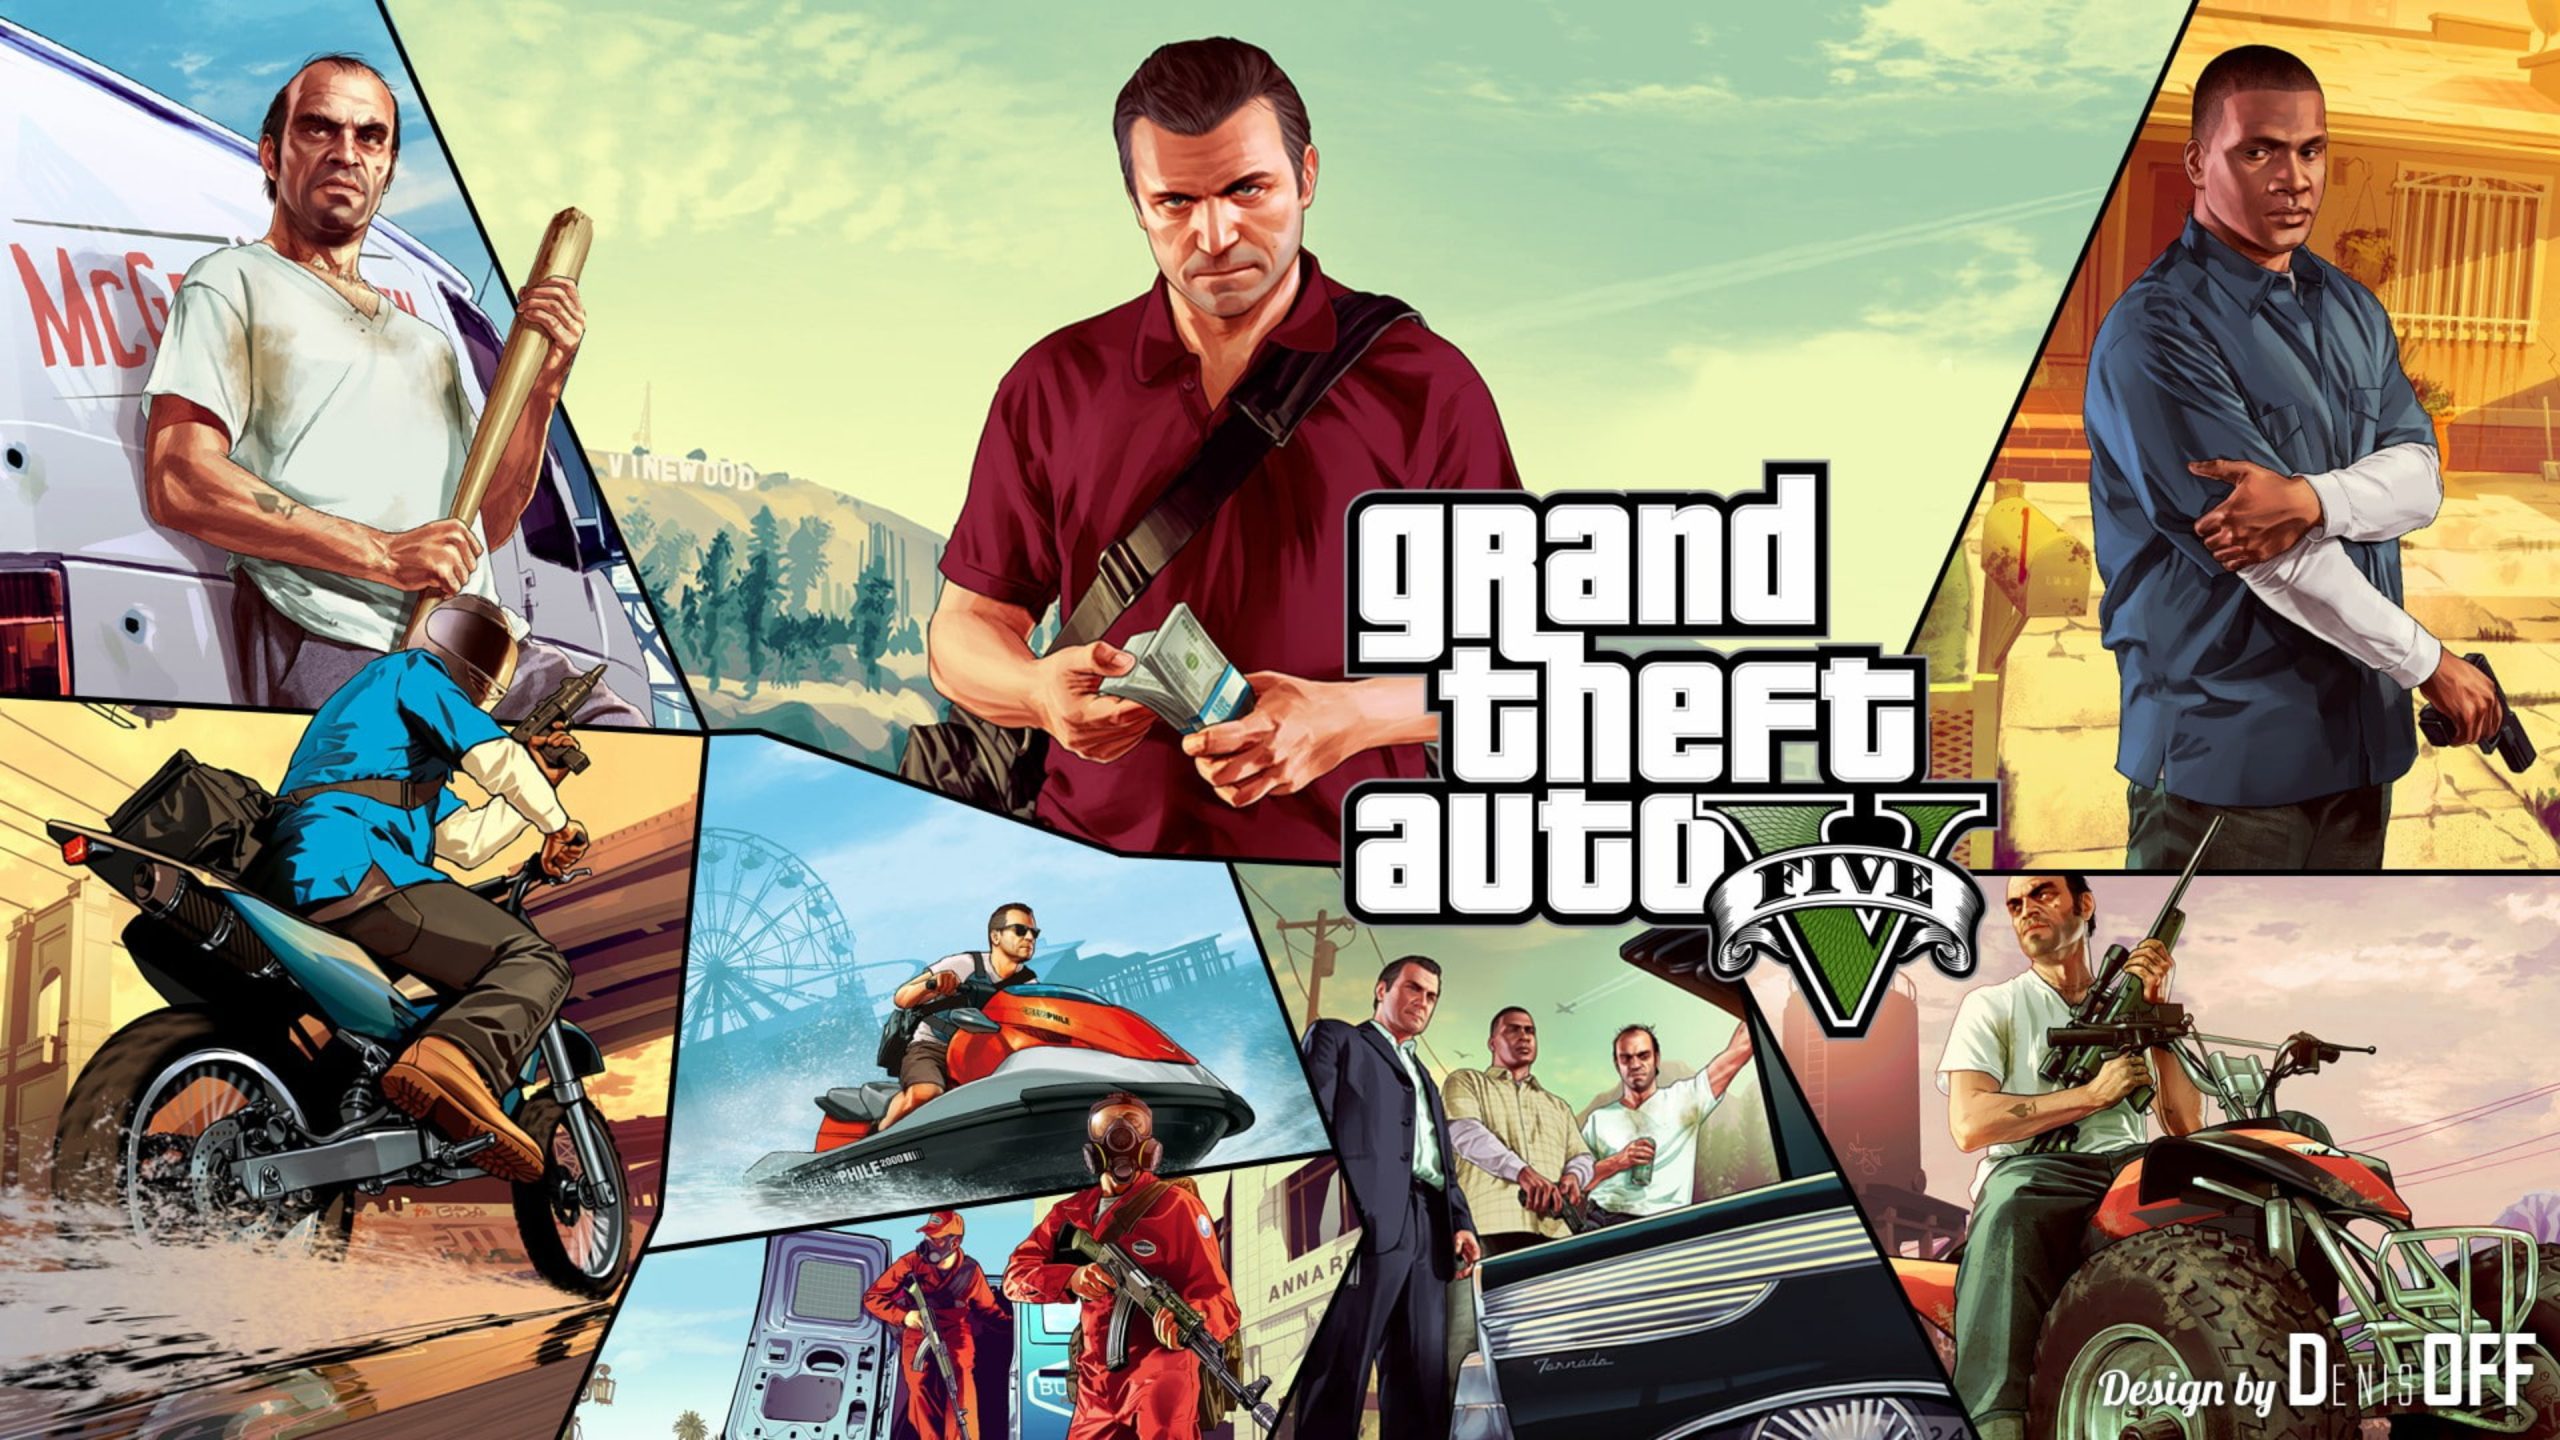 Grand Theft Auto V Wallpaper - 3840x2160px (4K) free download